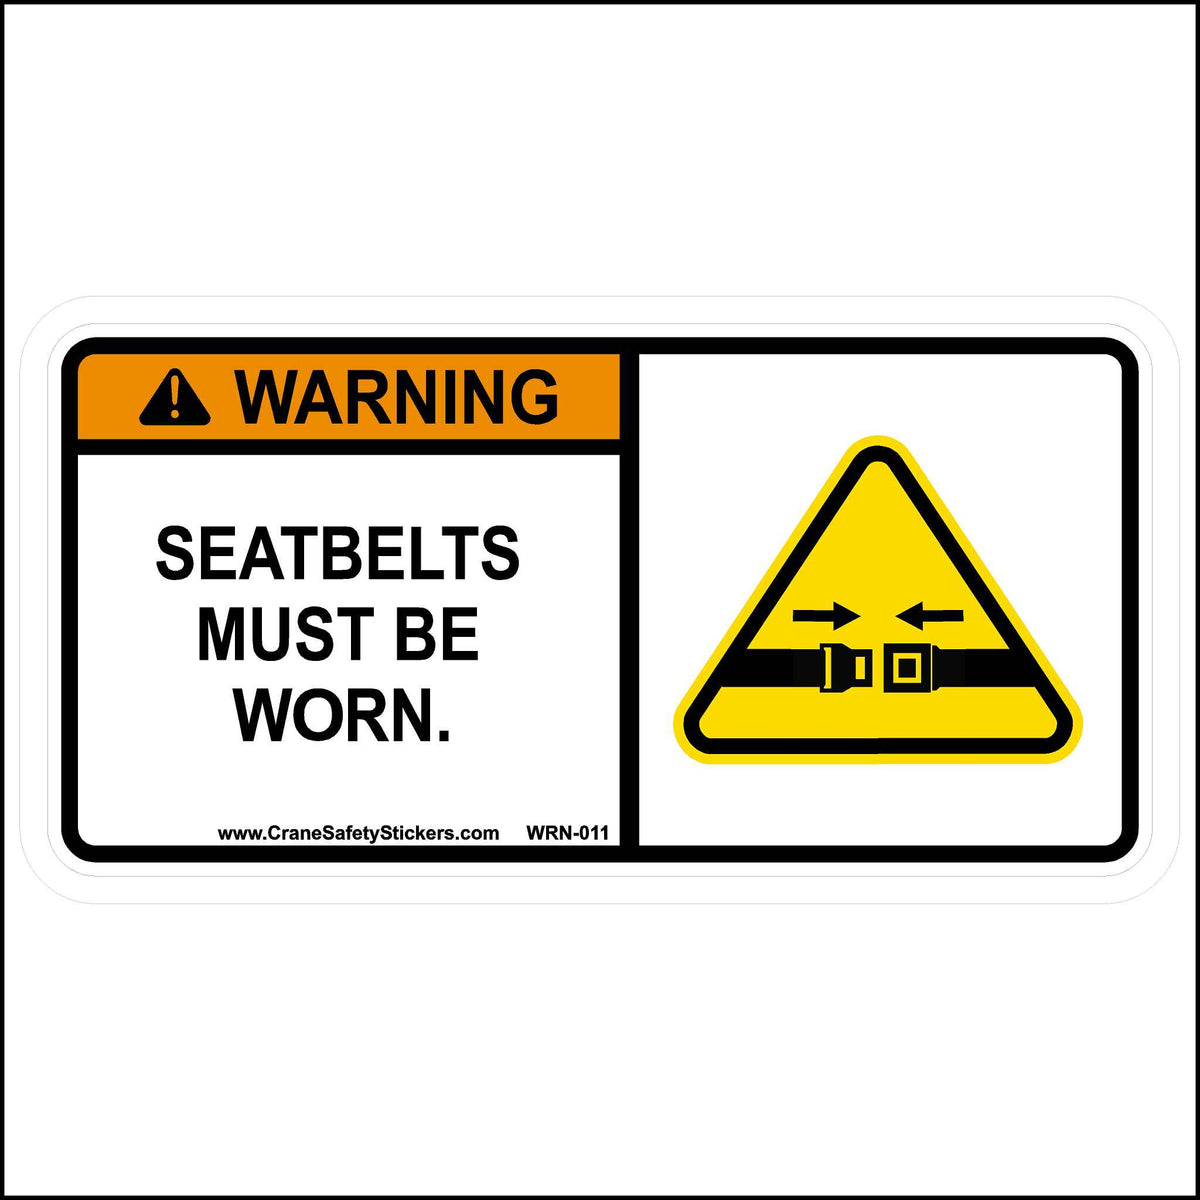 Large Backhoe Safety Sticker Kit